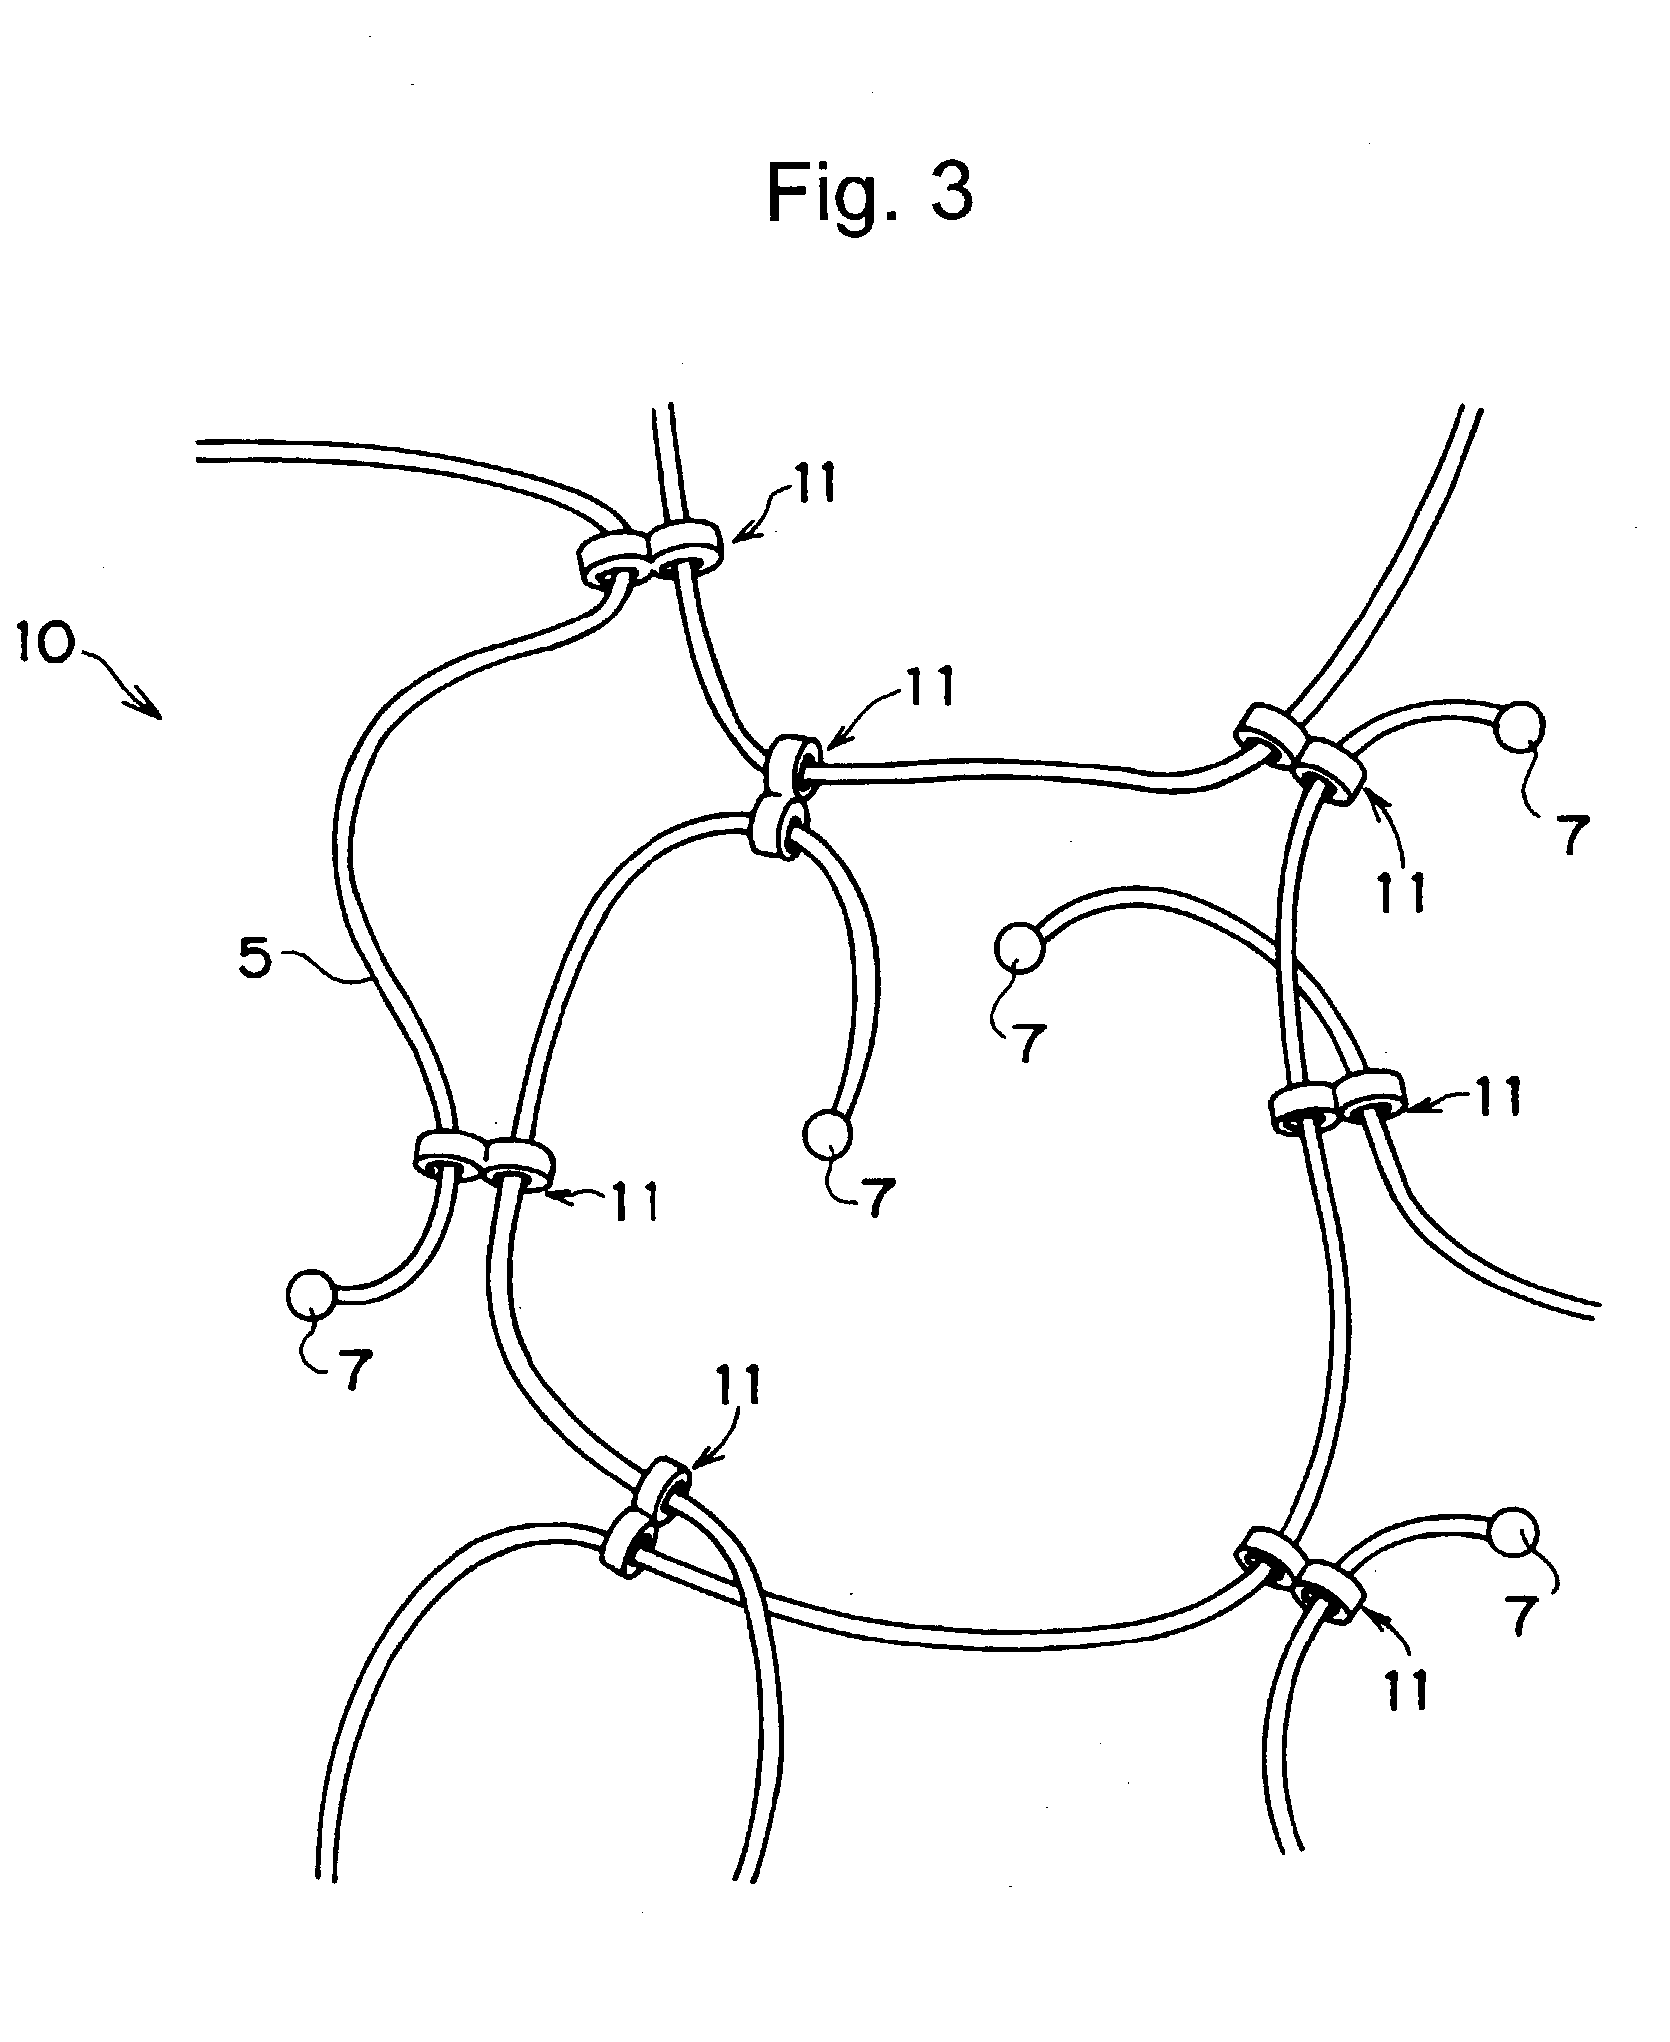 Compound comprising crosslinked polyrotaxane